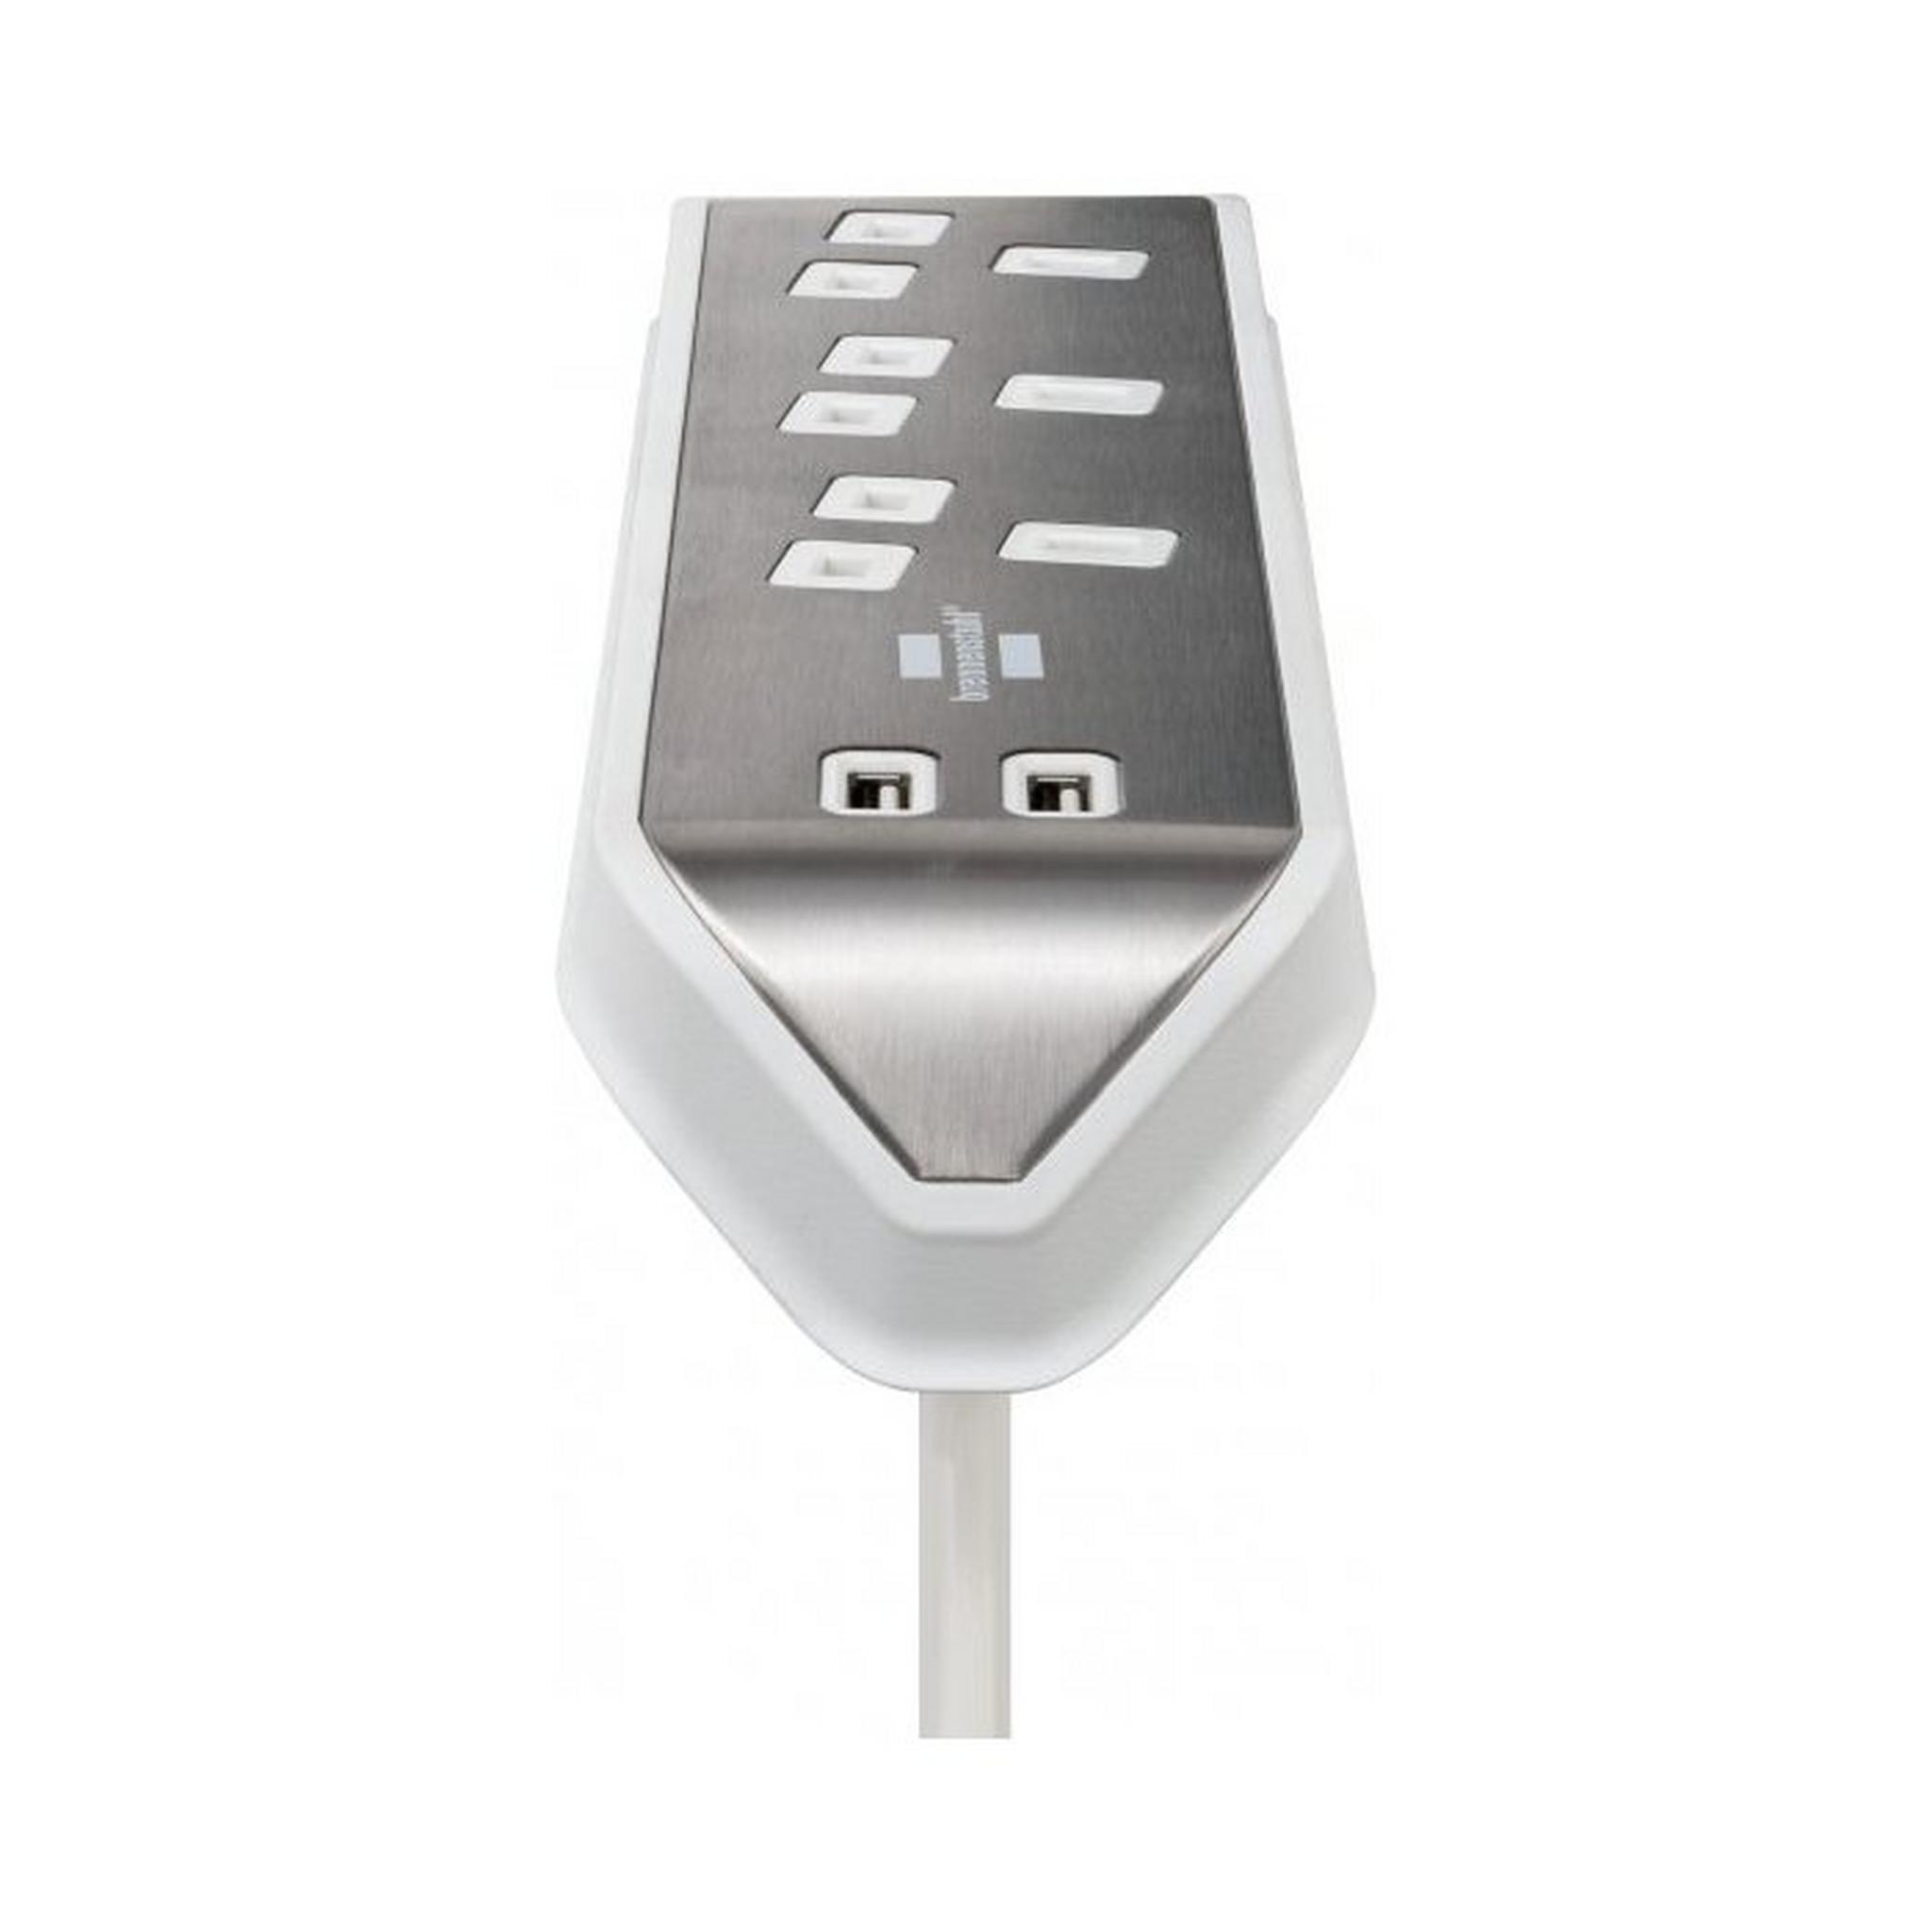 BRENNENSTUHL 3 Sockets Power Extension, 2M, 2 USB Ports, 1153593420 - Silver/ White